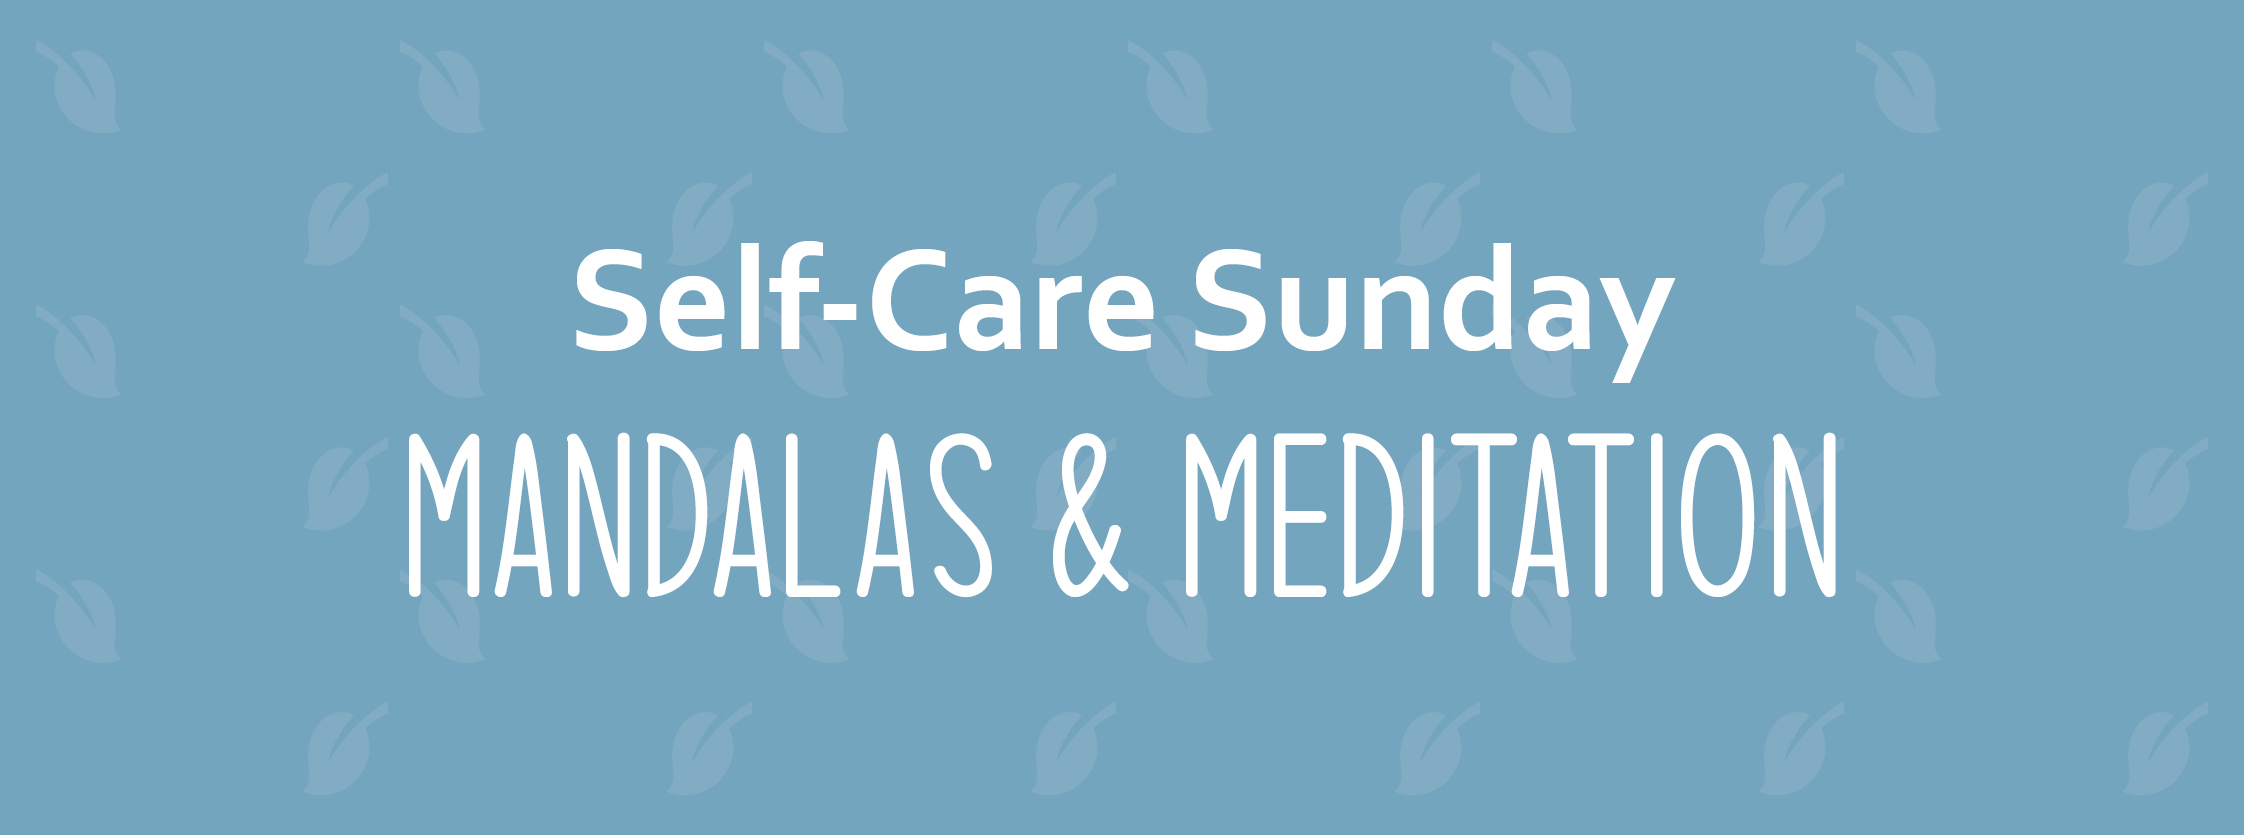 Self-Care Sunday | Mandalas & Meditation